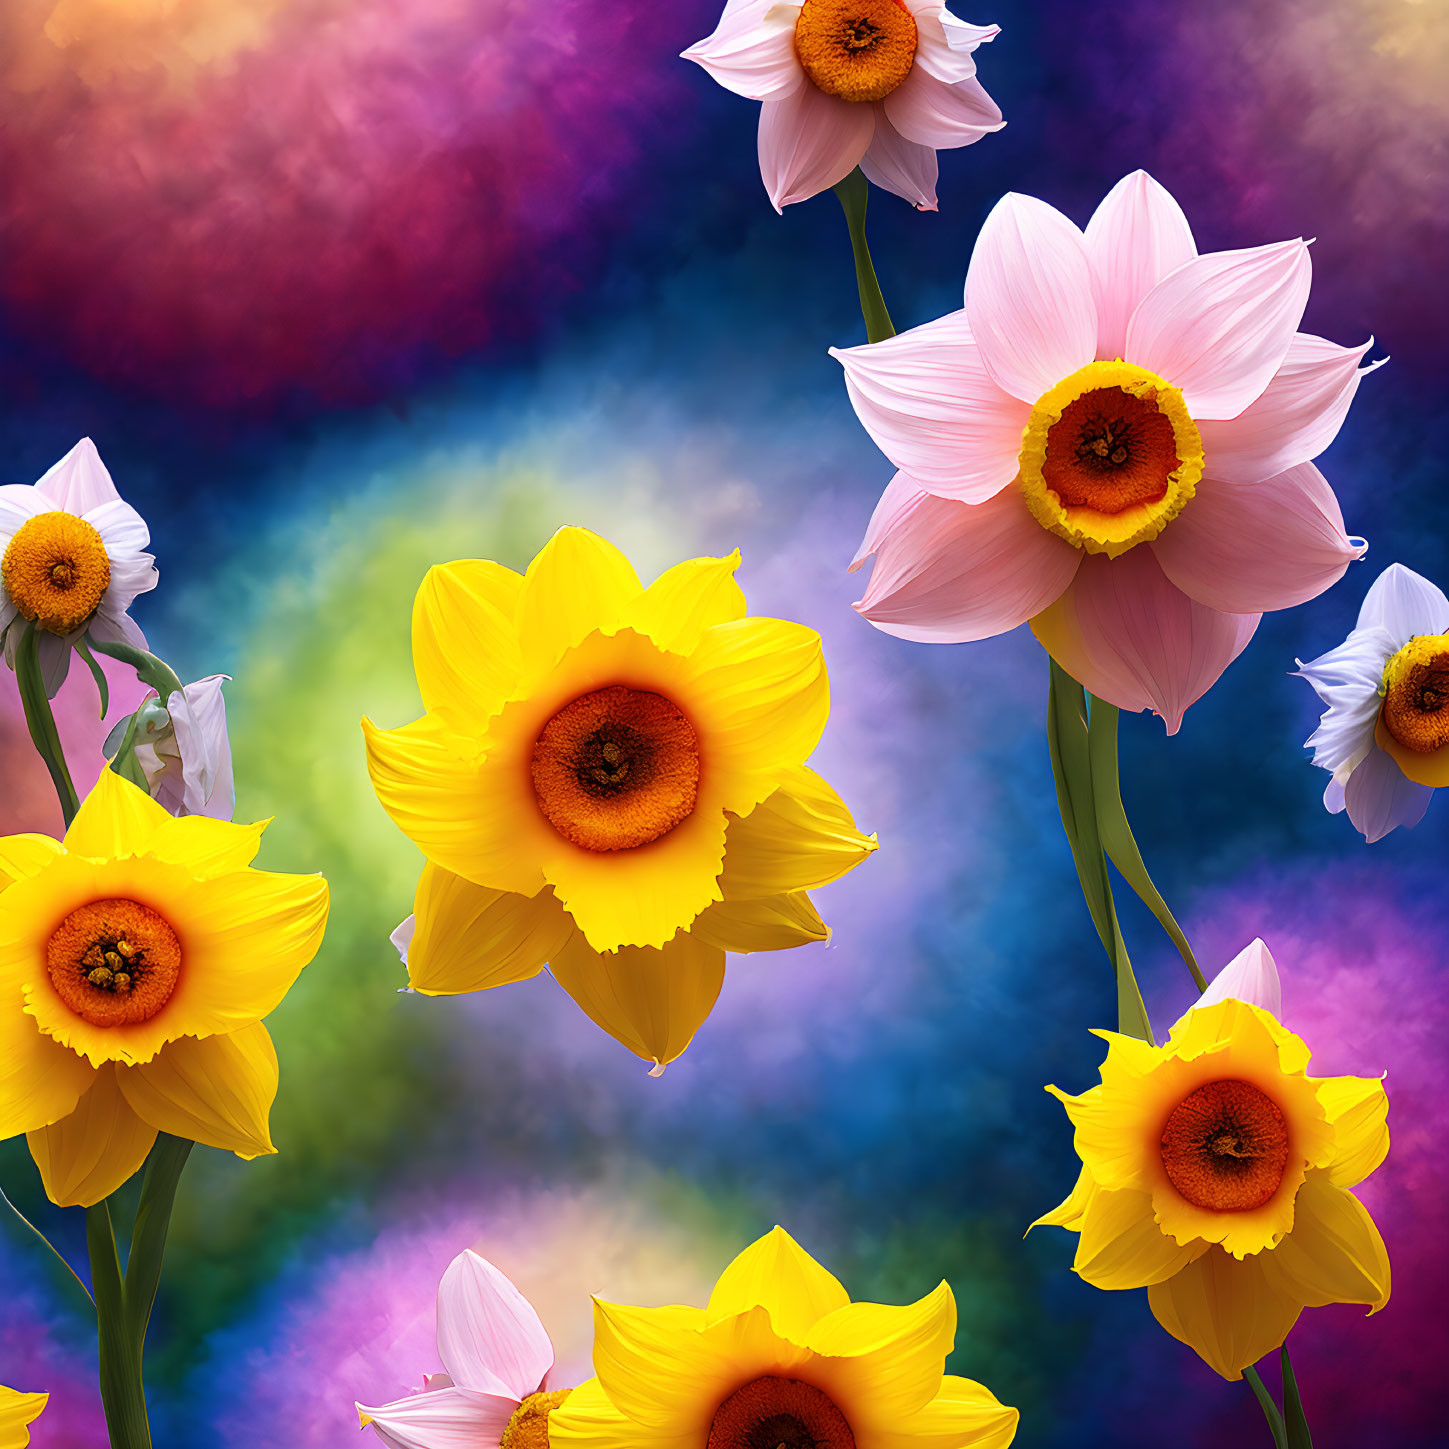 Daffodils Dancing for Joy